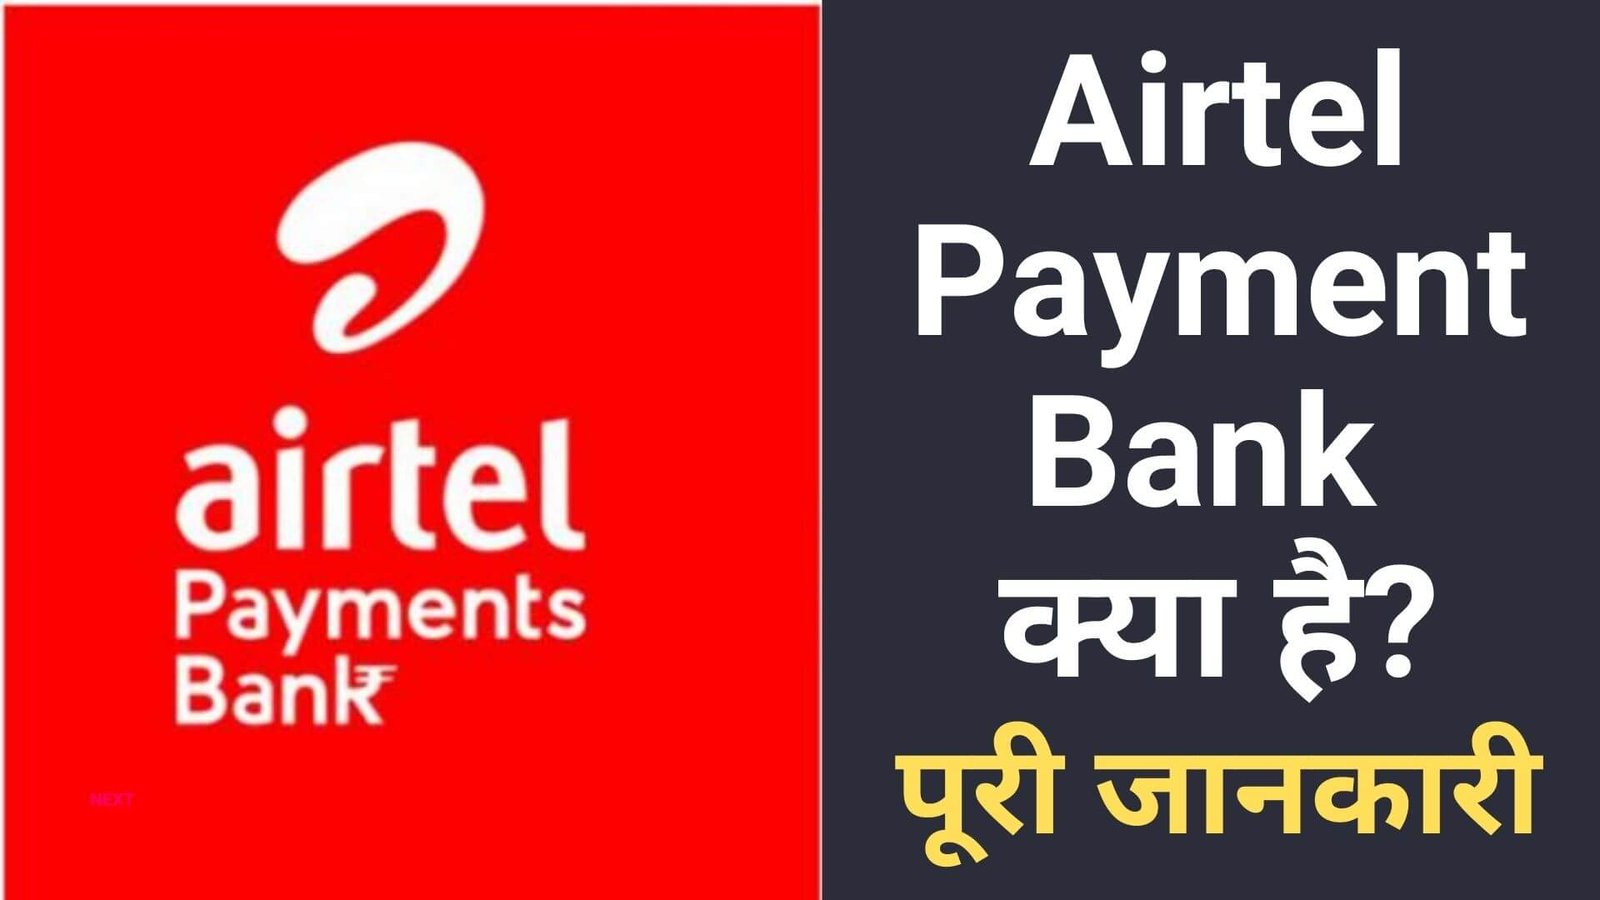 Airtel Payment bank kya hai